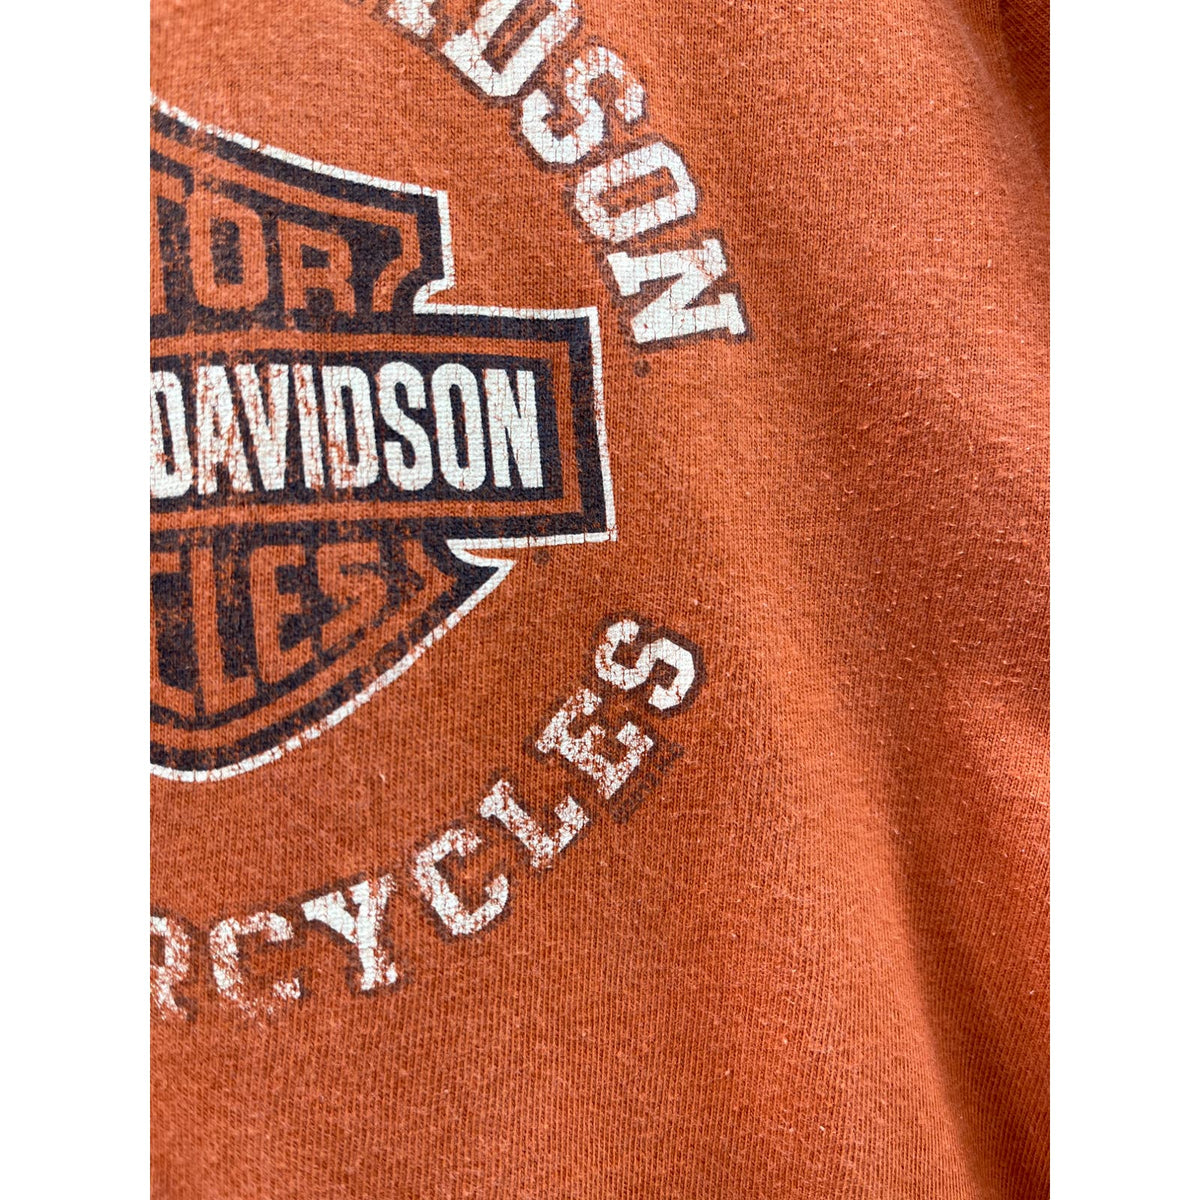 Vintage 2000's Harley-Davidson Naples Florida Graphic T-Shirt